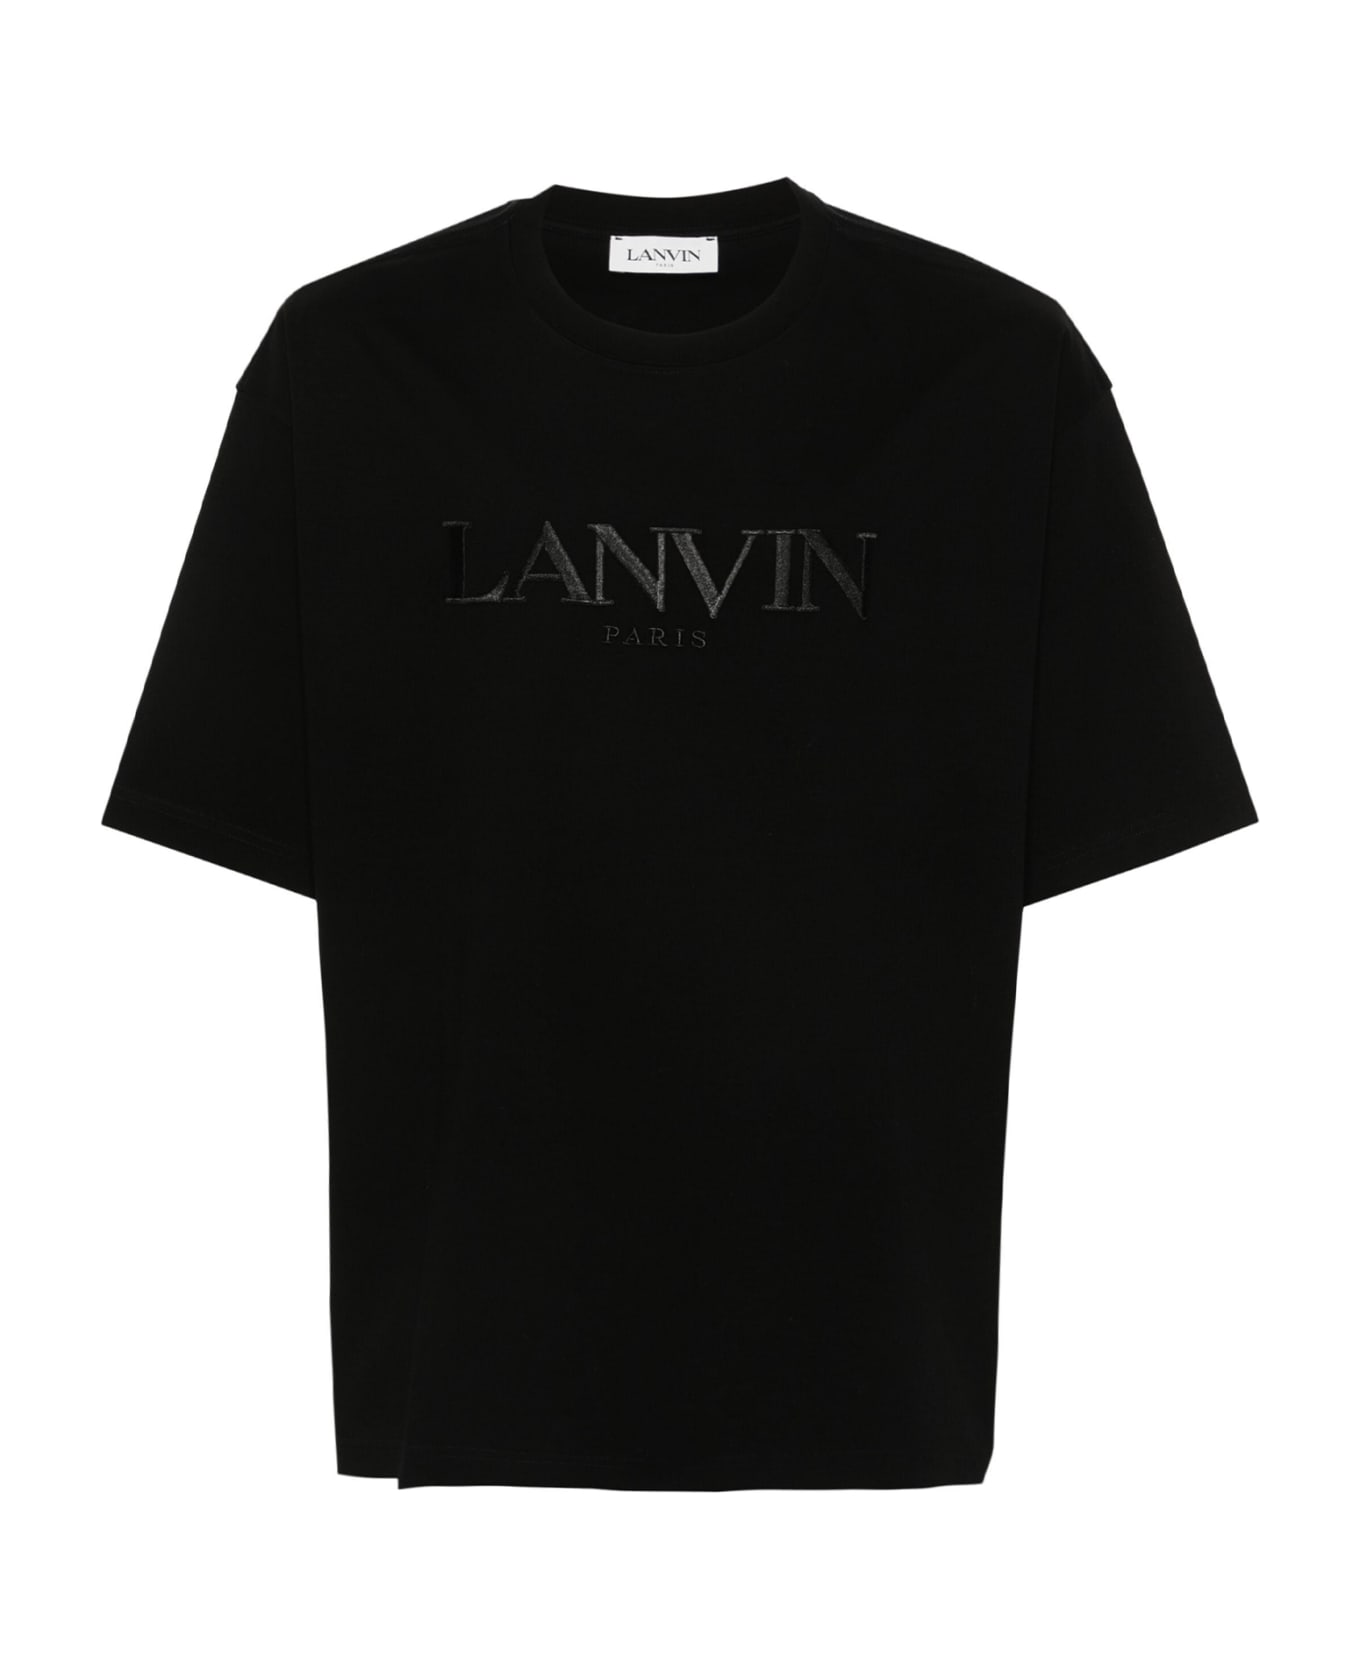 Lanvin T-Shirt - BLACK